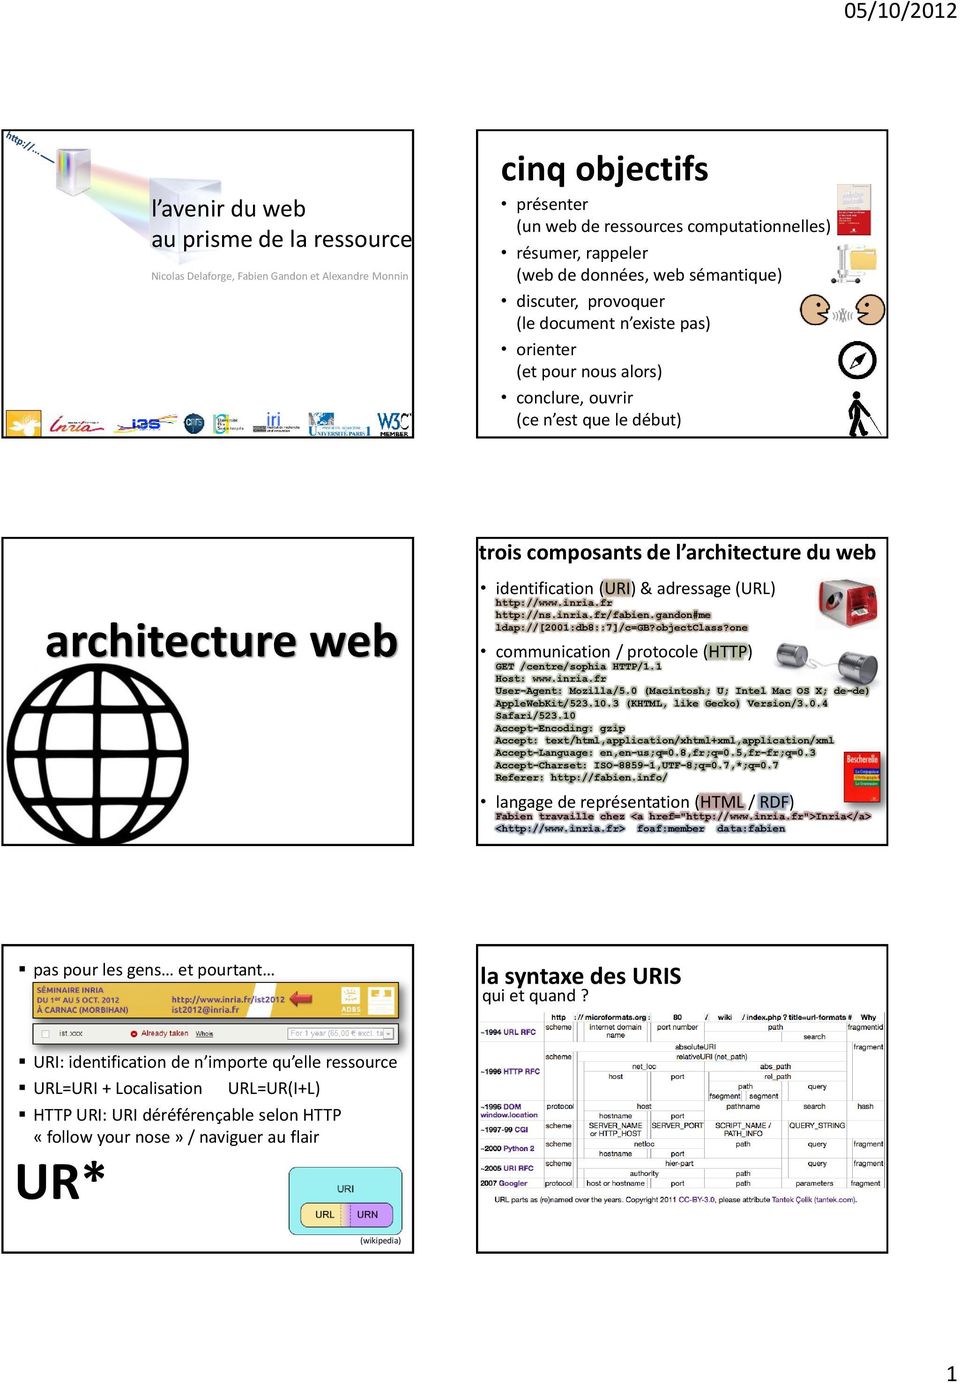 identification (URI) & adressage (URL) http://www.inria.fr http://ns.inria.fr/fabien.gandon#me ldap://[2001:db8::7]/c=gb?objectclass?one communication / protocole (HTTP) GET /centre/sophia HTTP/1.